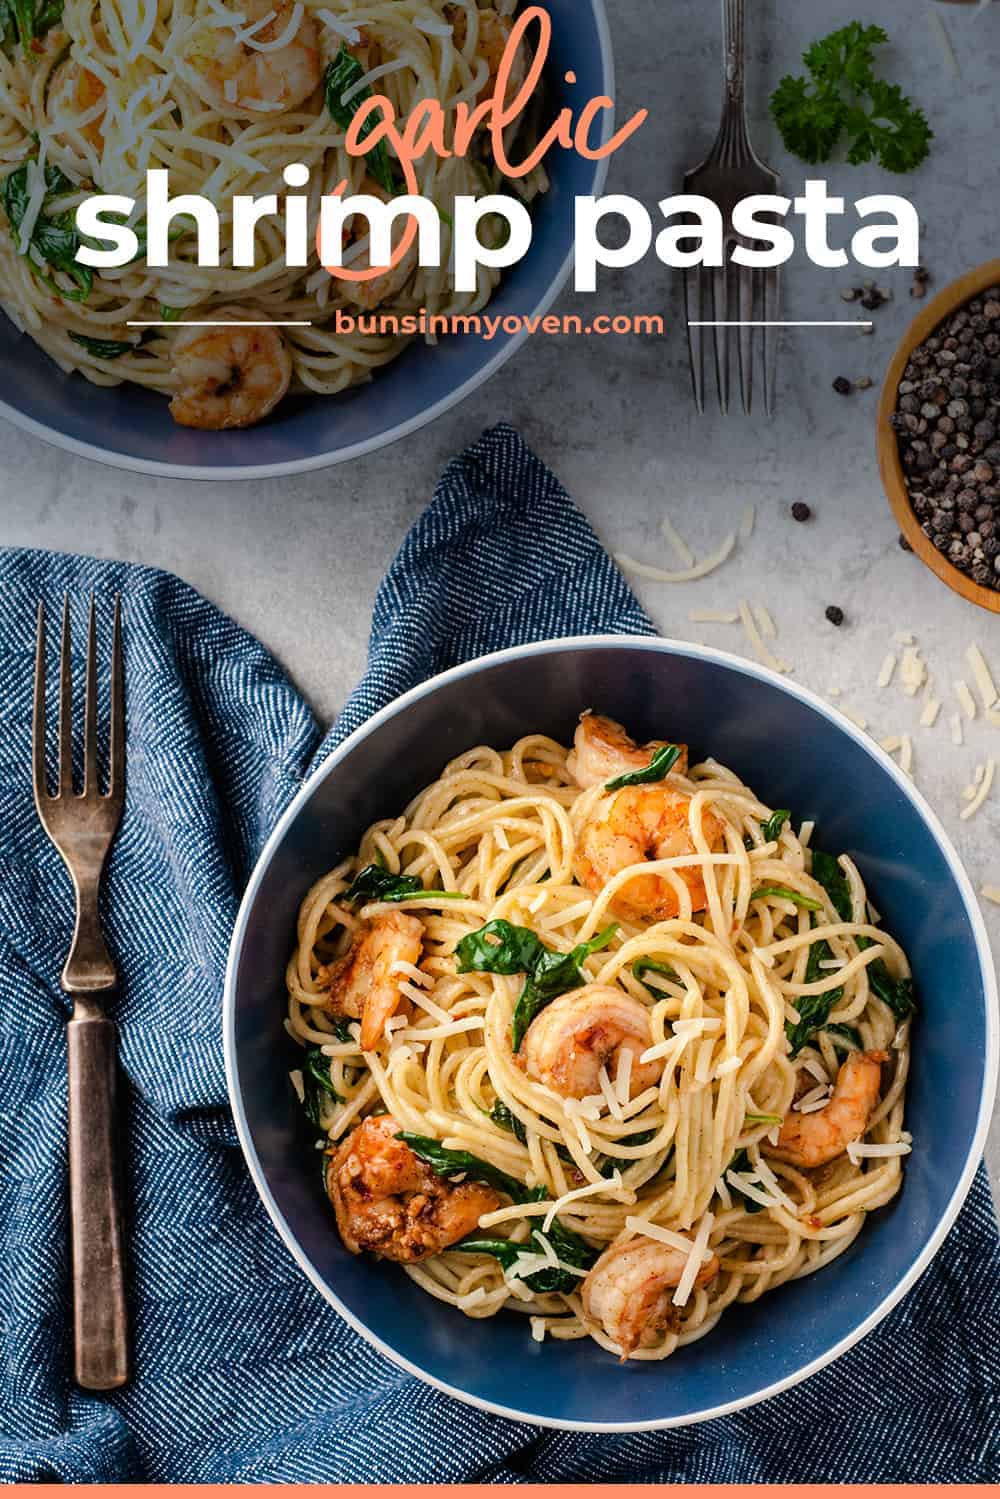 garlic shrimp pasta in blue bowl with napkin